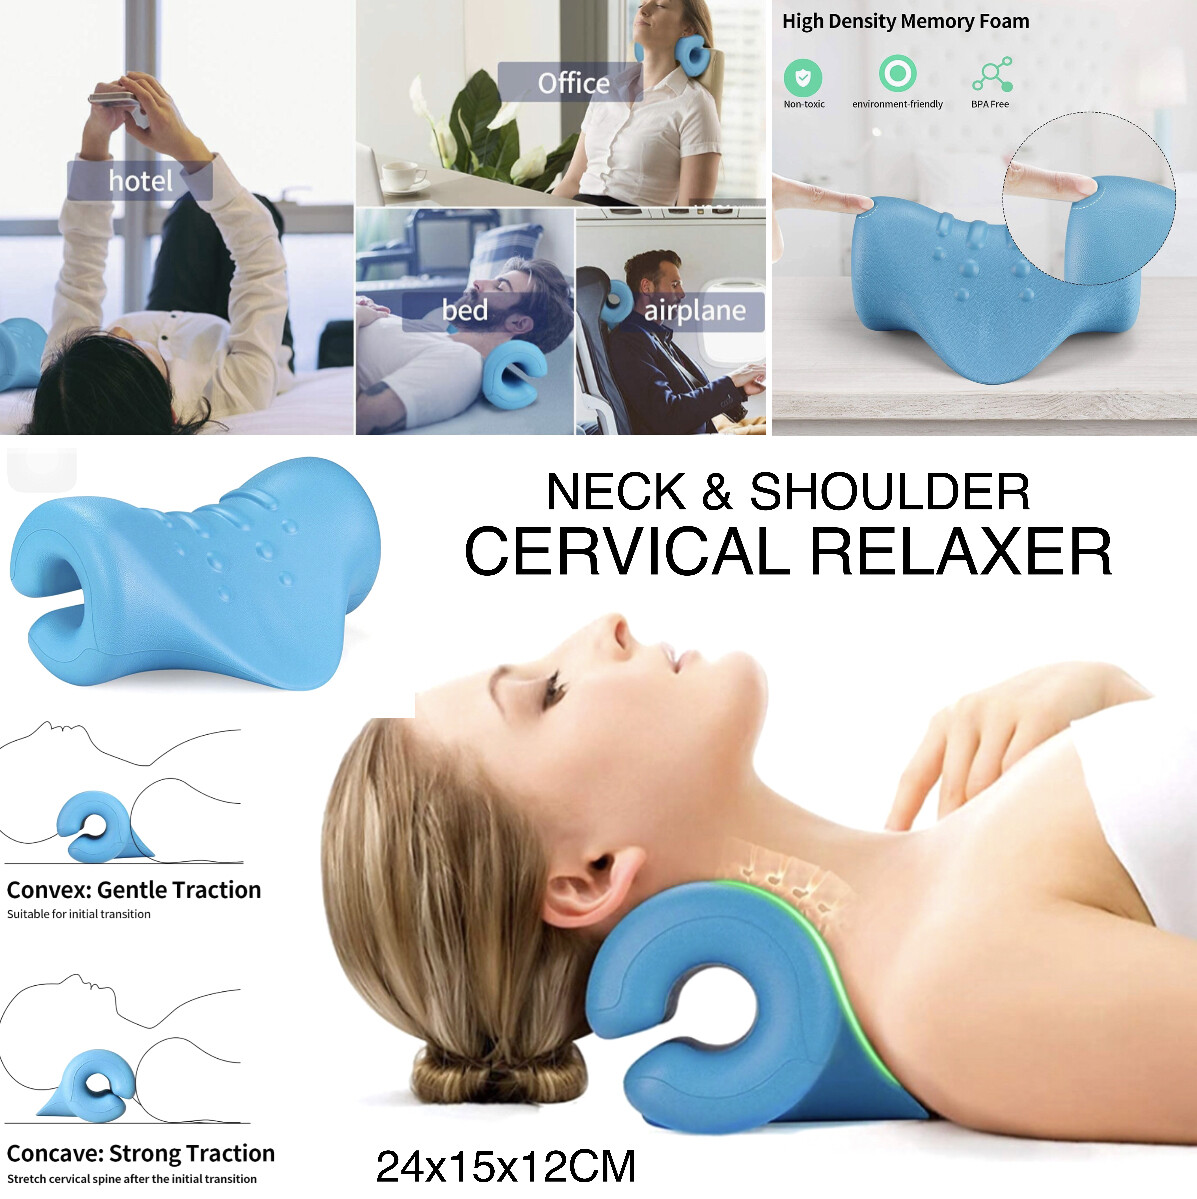 Cervical Relaxer